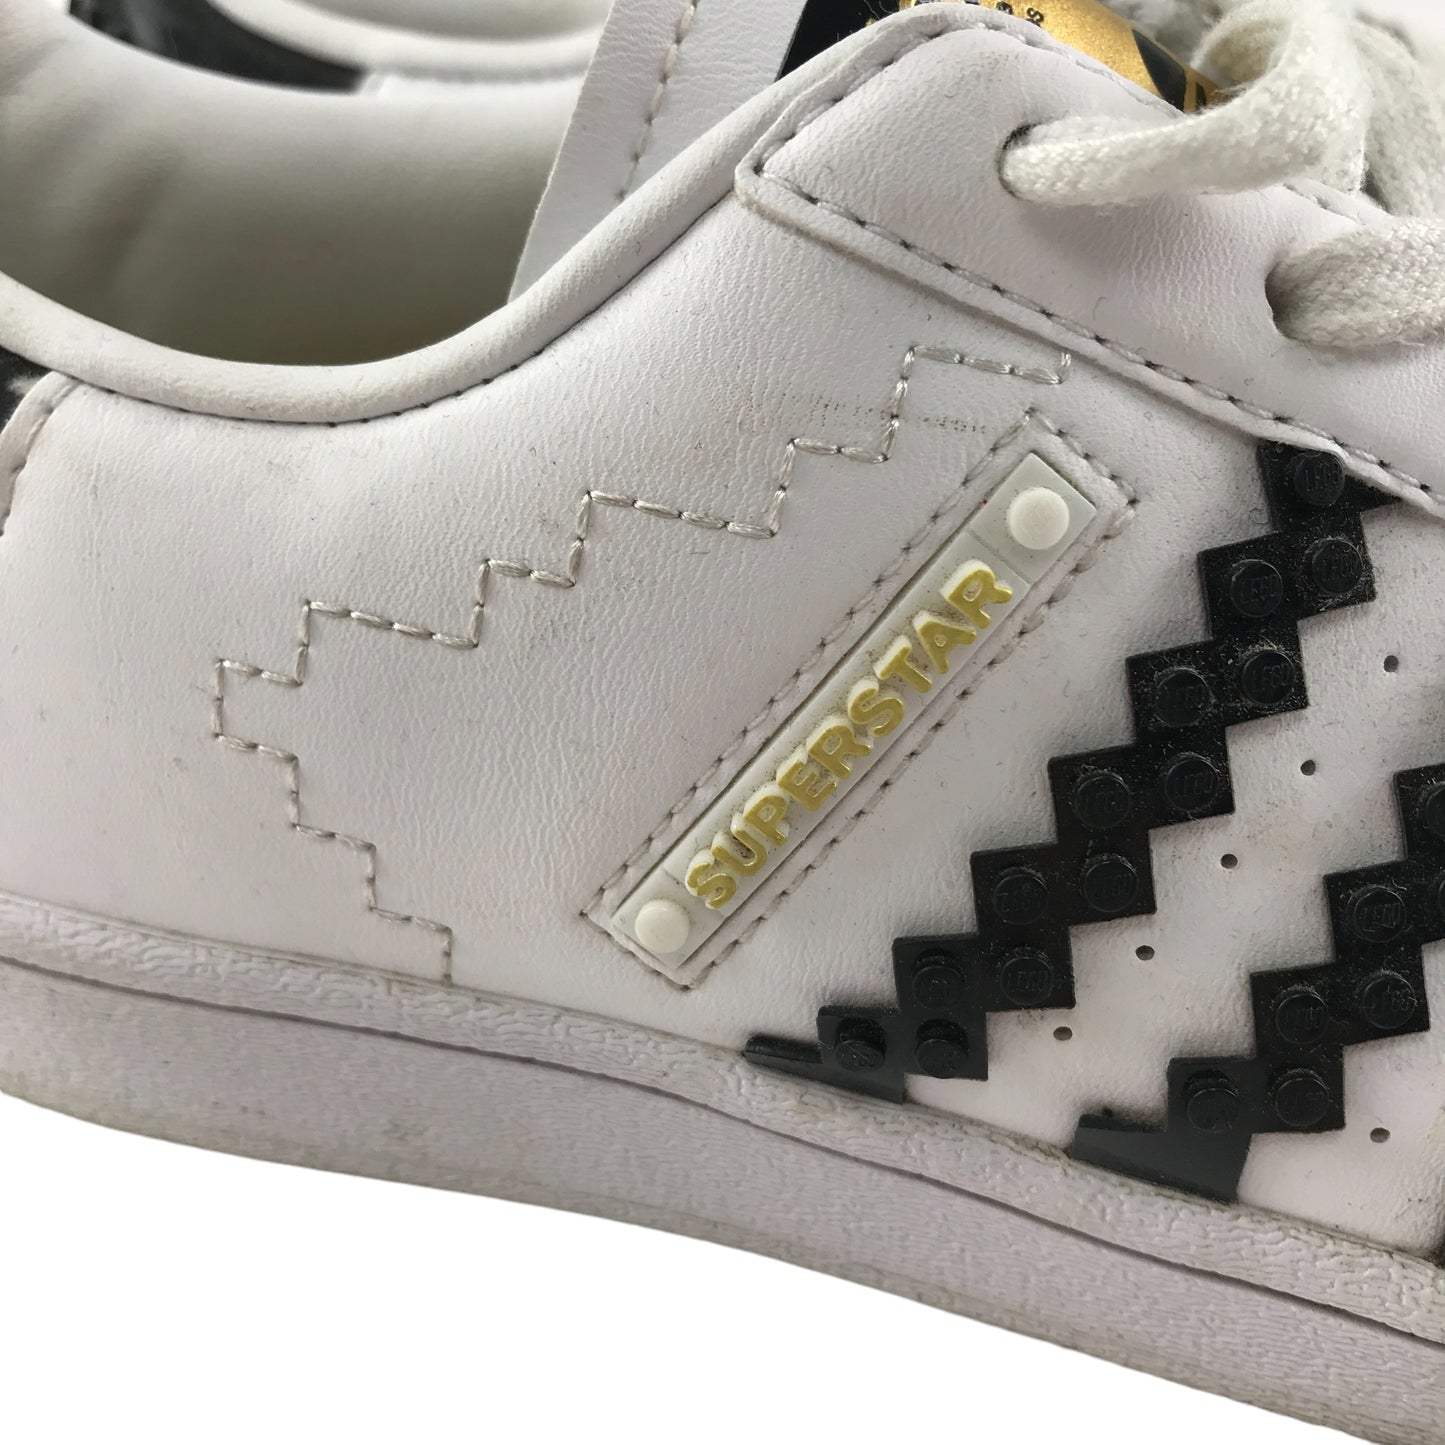 Adidas Superstar x LEGO Trainers Shoe Size 5.5 White Black LEGO Piece textured